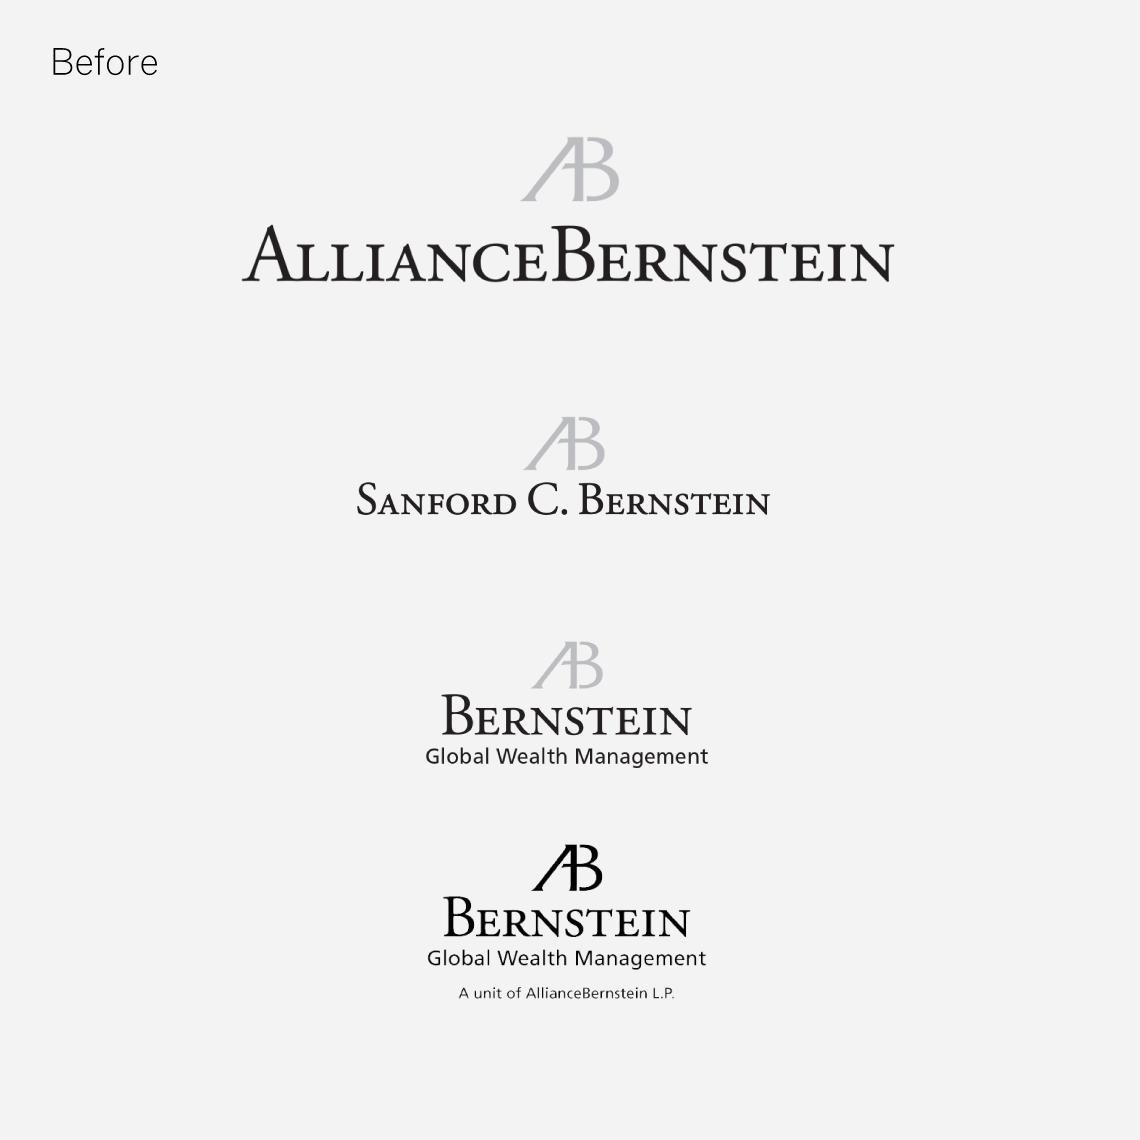 legacy version of the AB (AllianceBernstein) logo